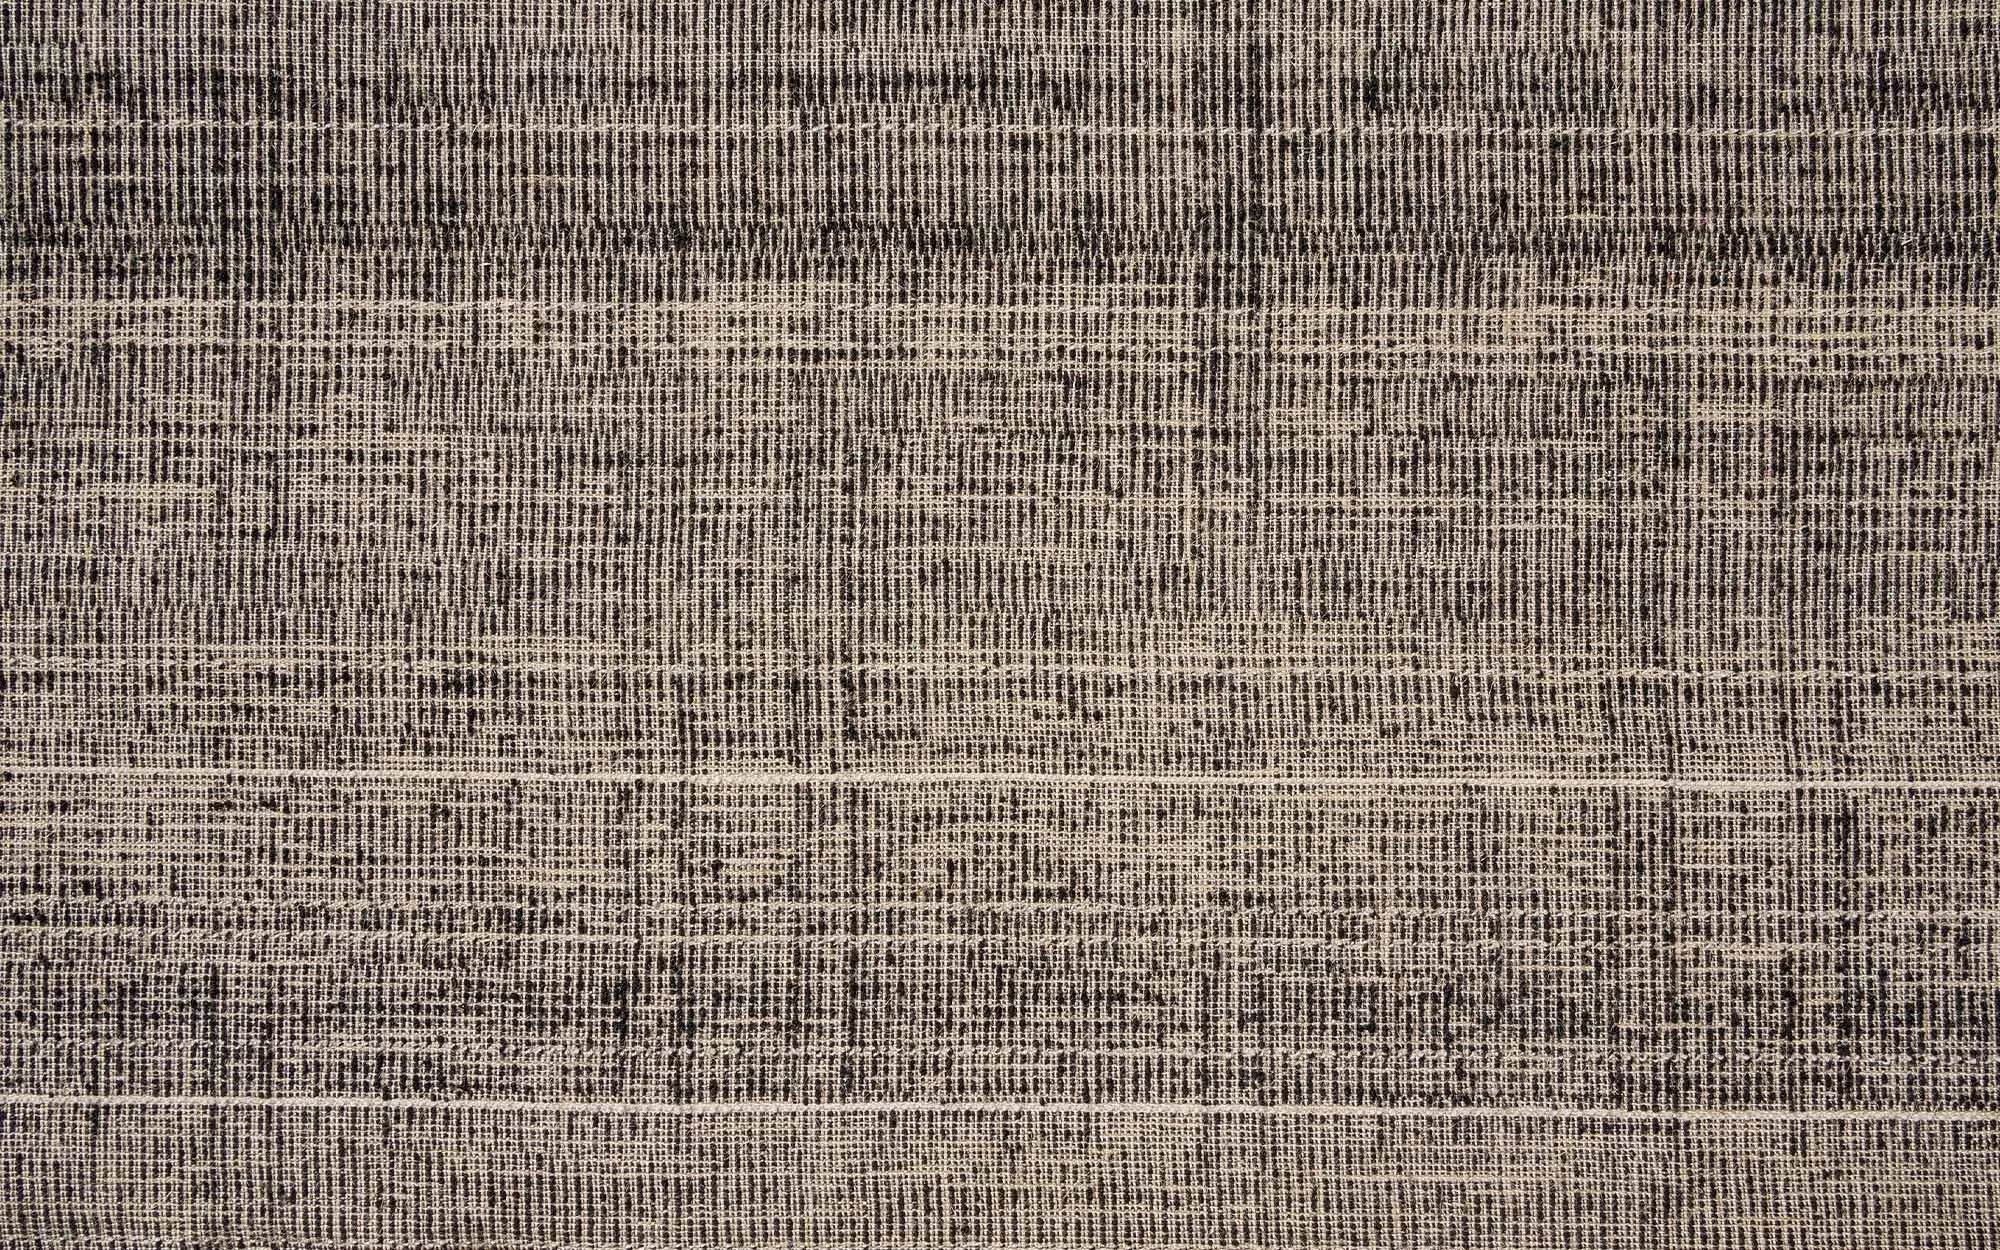 Wilton Carpet M - Ronan & Erwan Bouroullec - Carpet - Galerie kreo